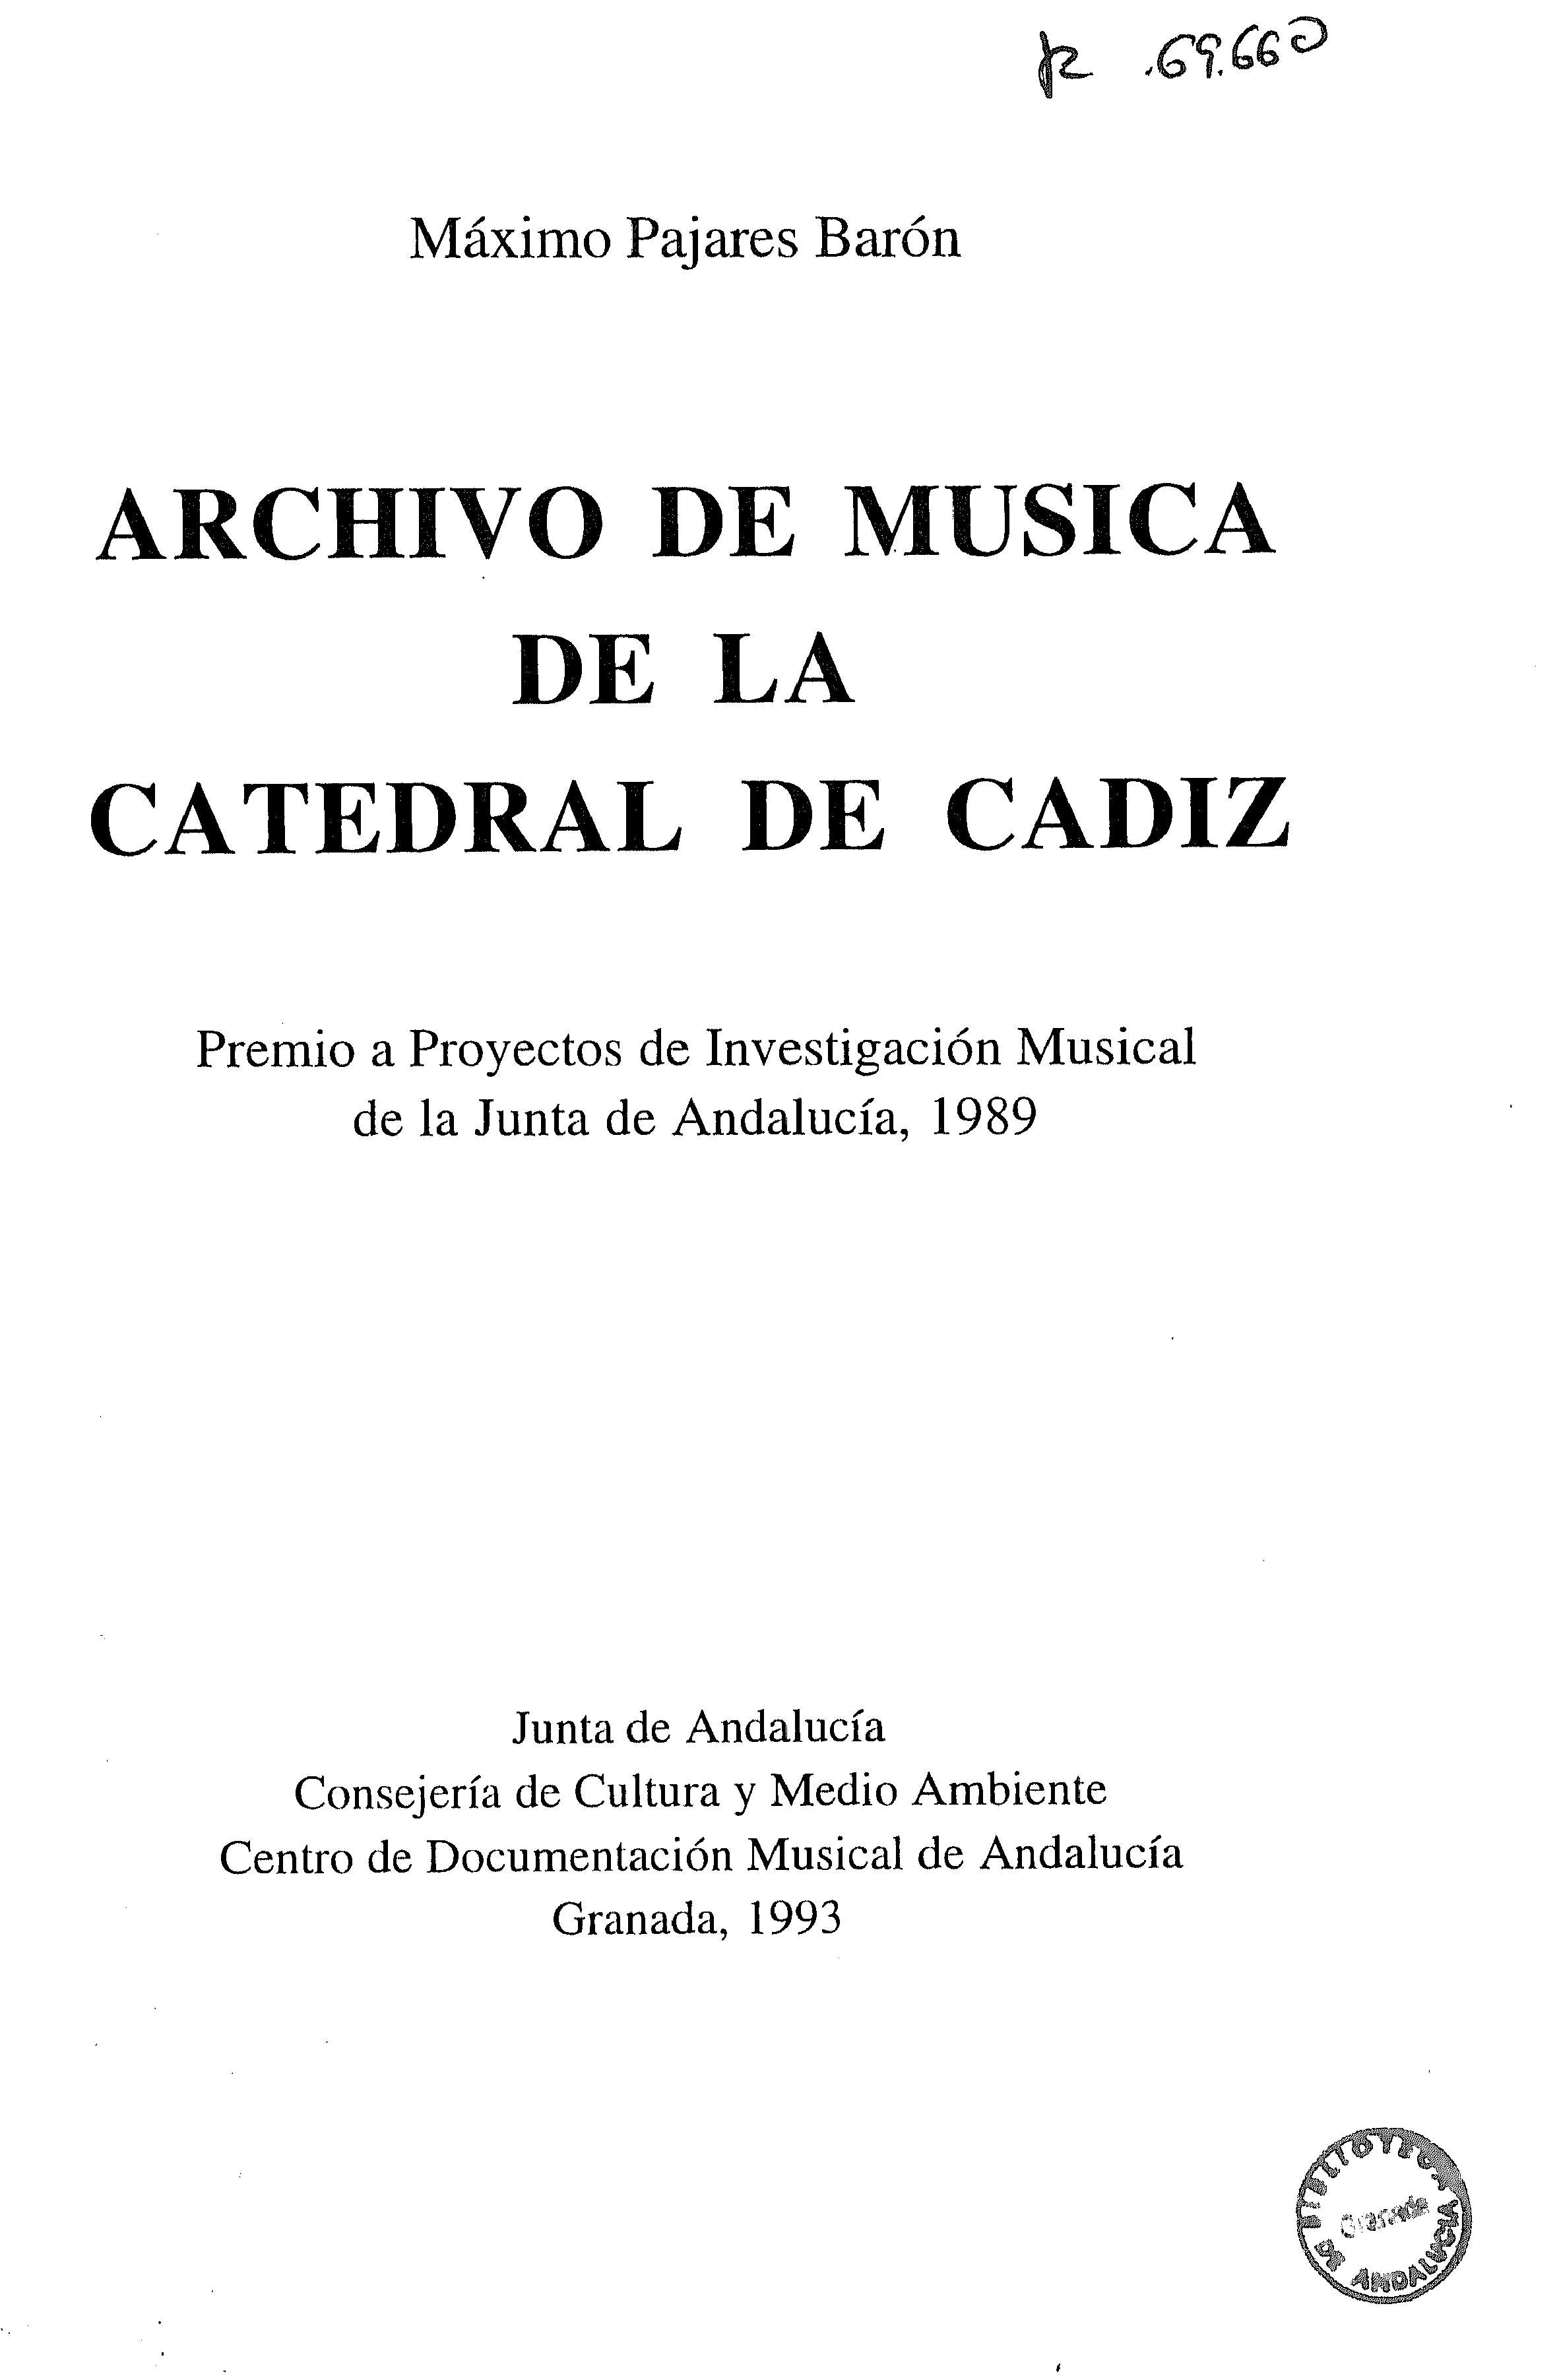 Archivo de Música de la Catedral de Cádiz